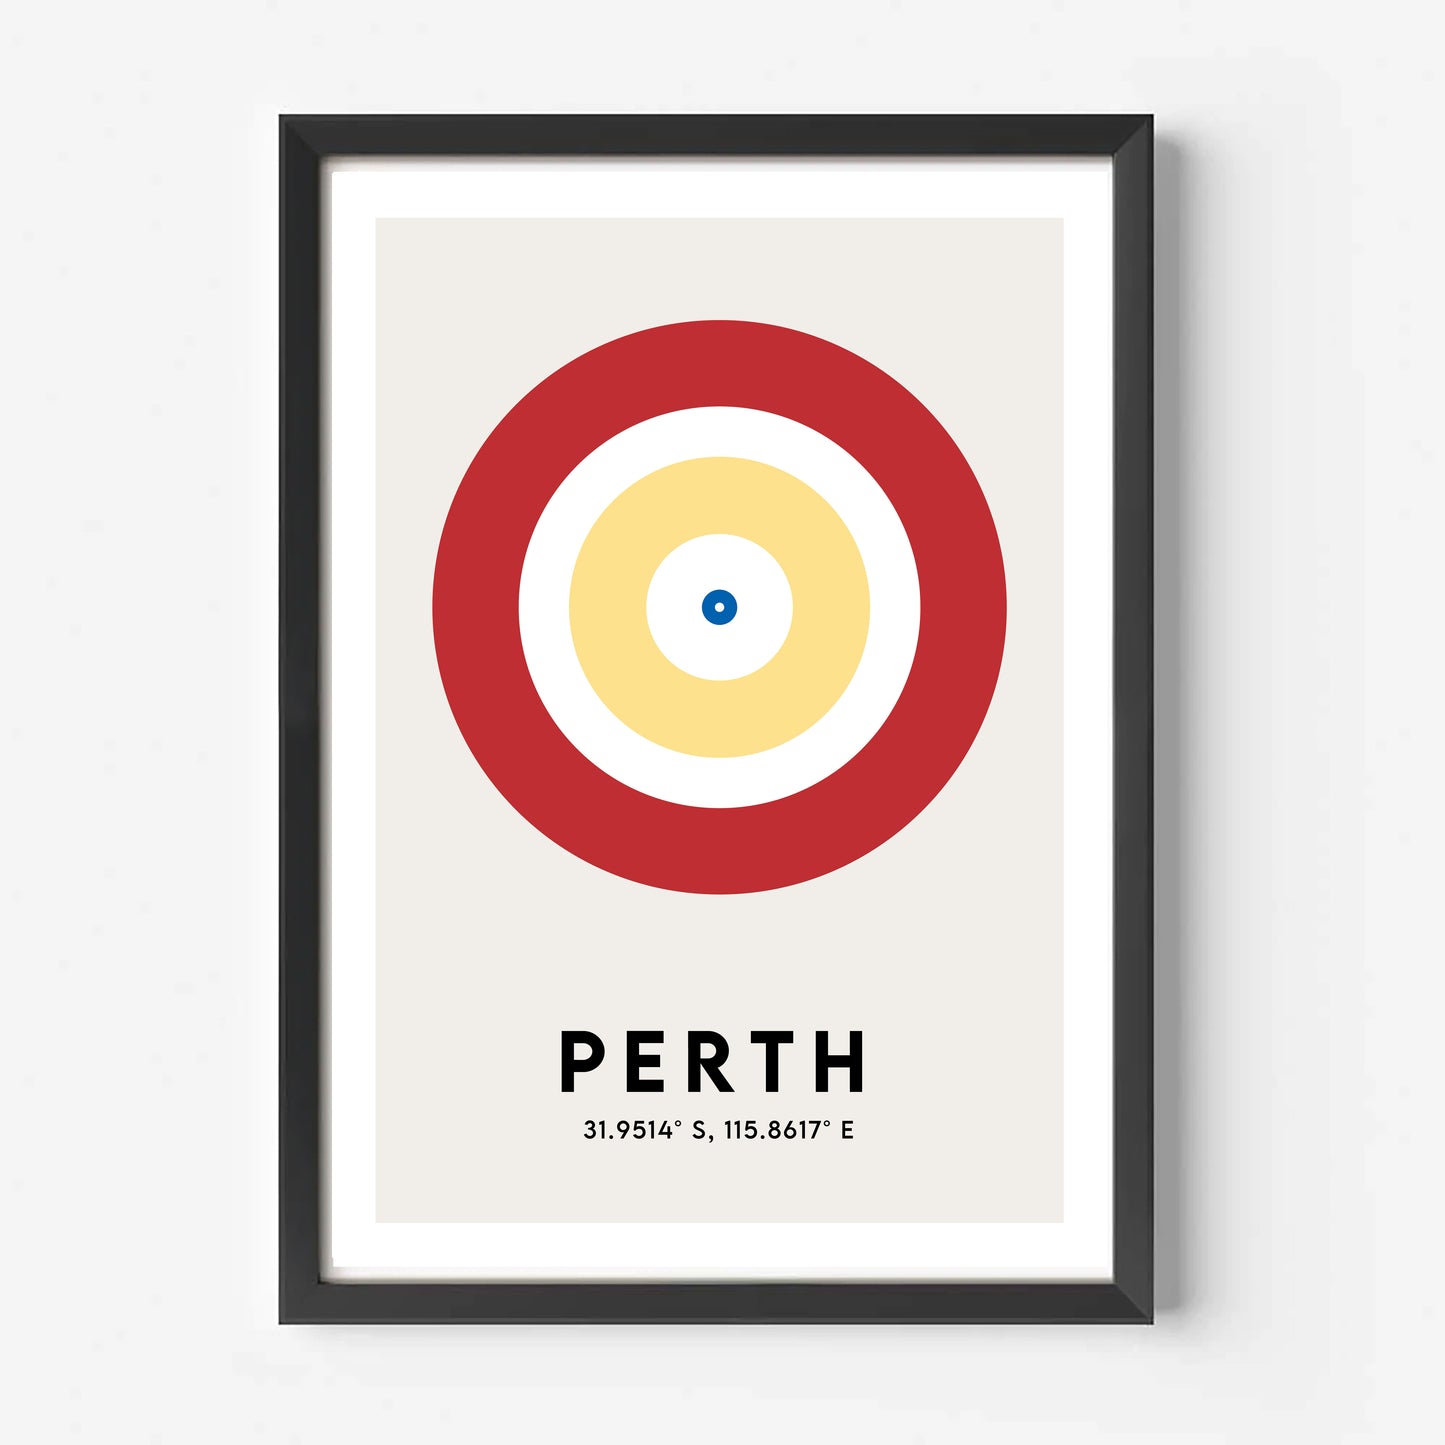 Origin 'Perth'